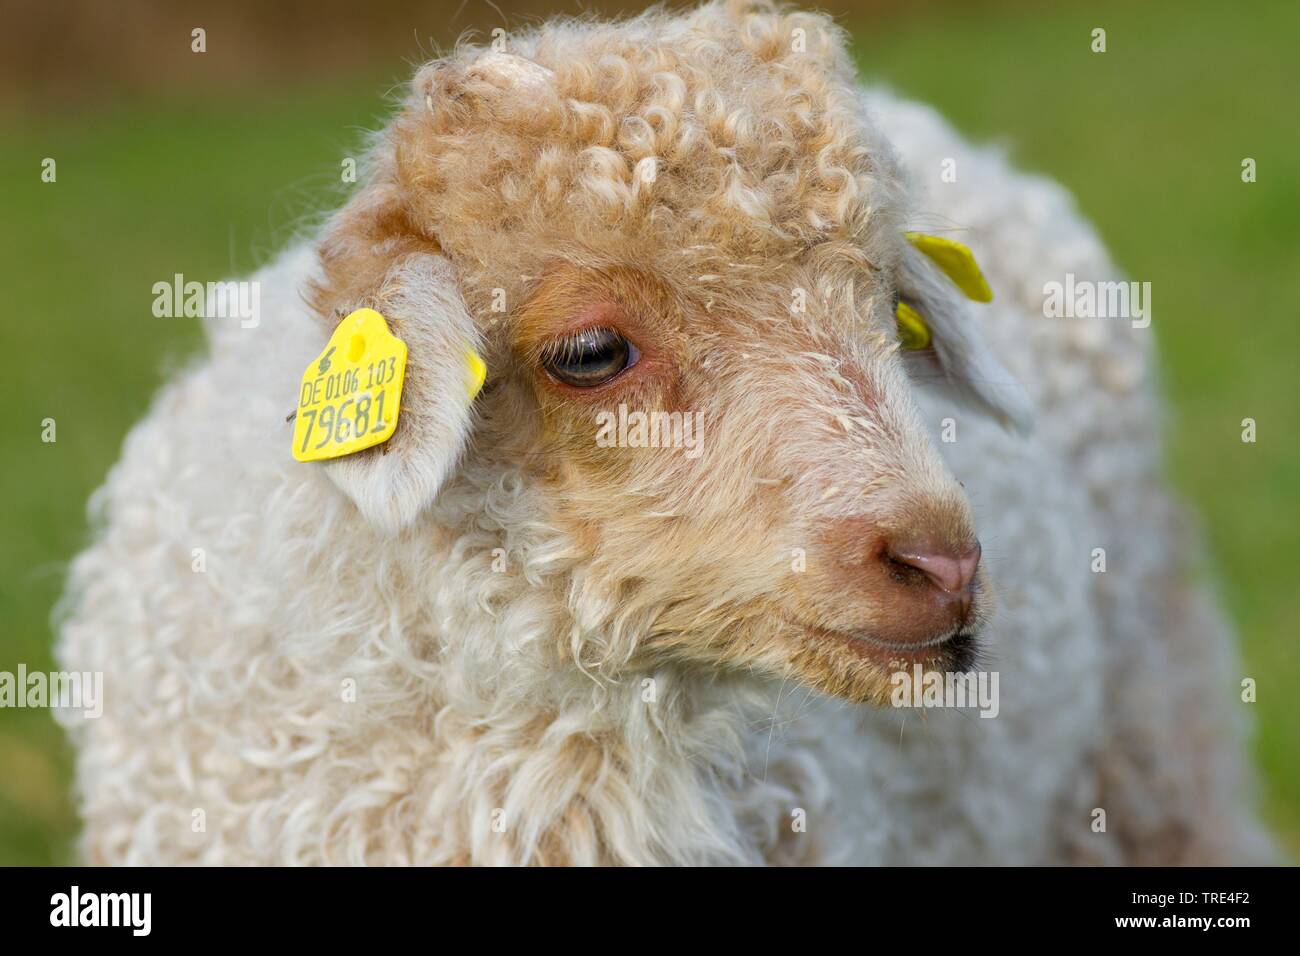 Racka, Racka sheep (Ovis ammon f. aries), white lamb of Racka sheep, Germany, Hesse Stock Photo